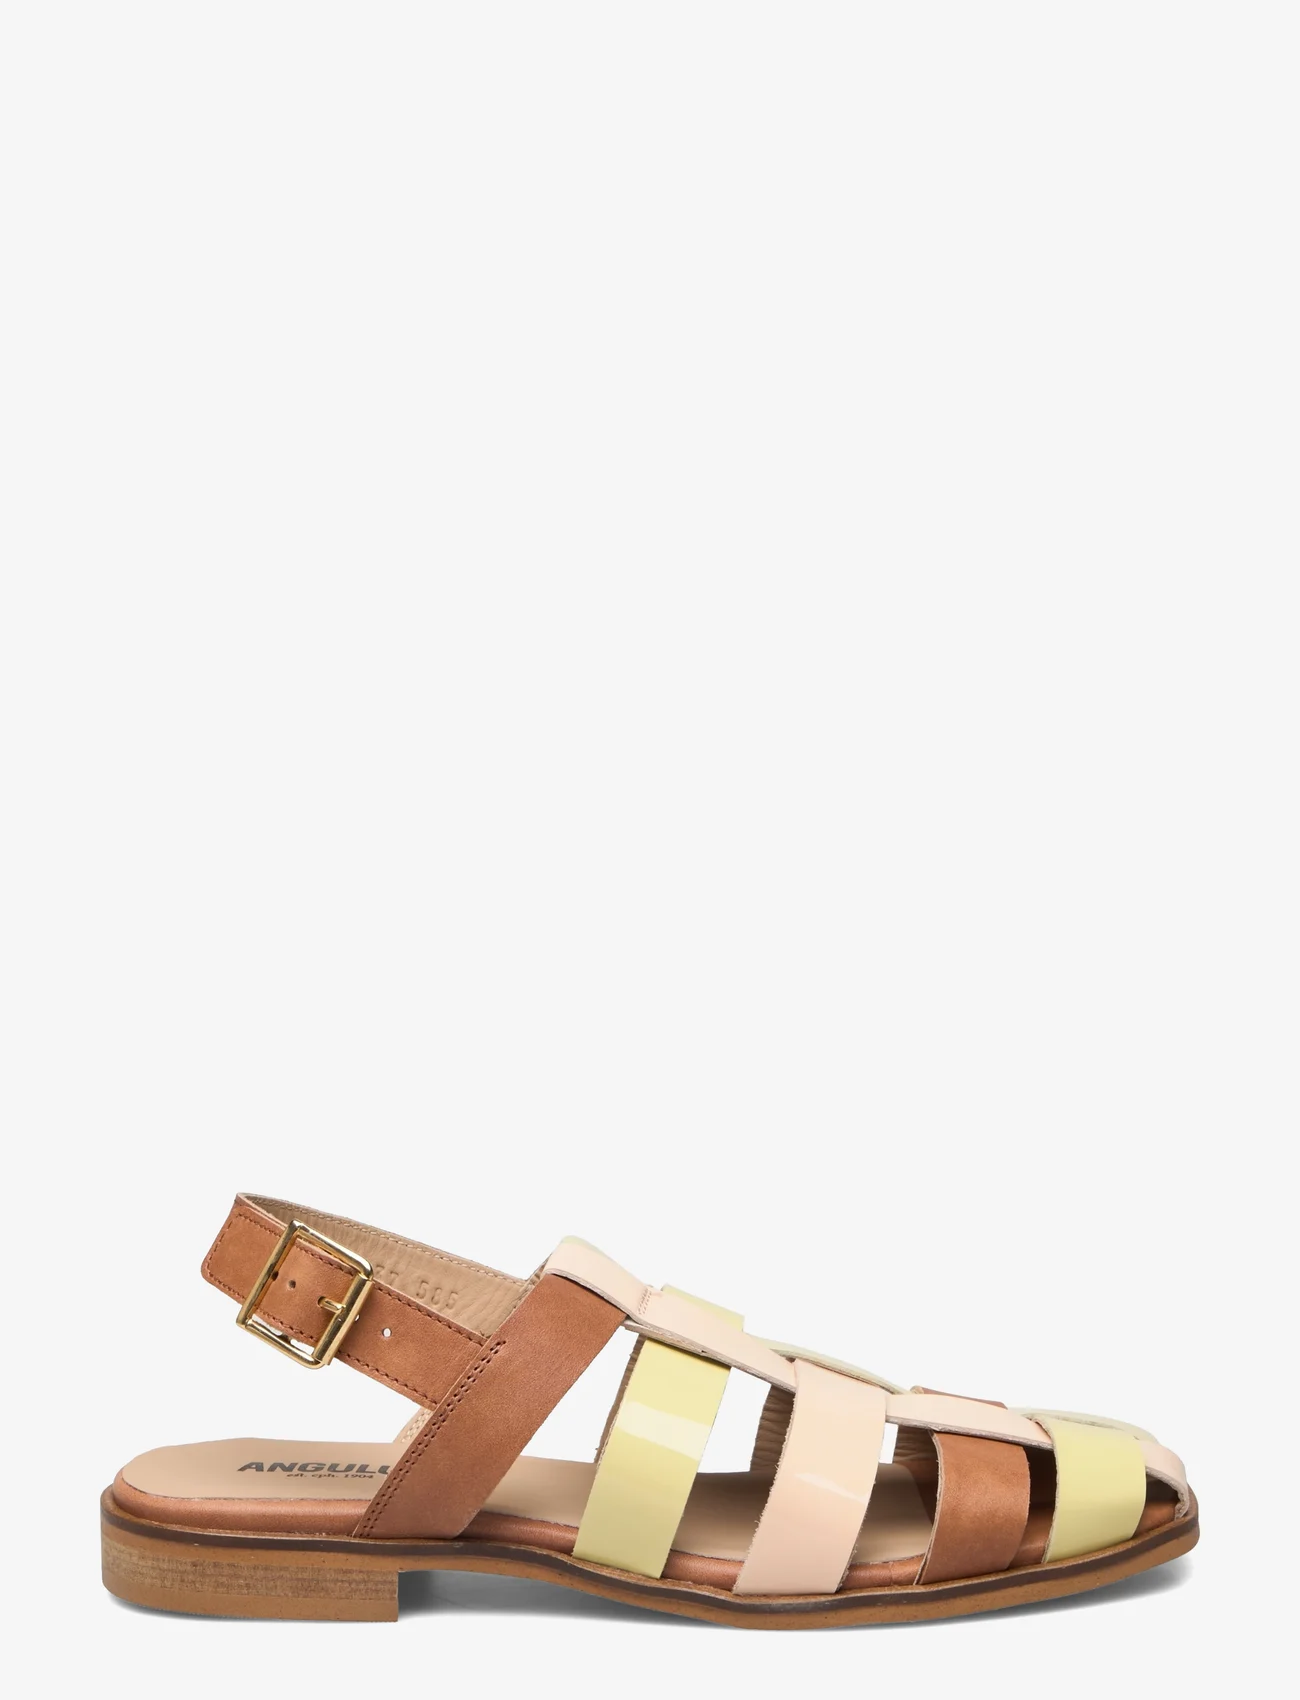 ANGULUS - Sandals - flat - platte sandalen - 1789/2365/2405 tan/yellow/melo - 1